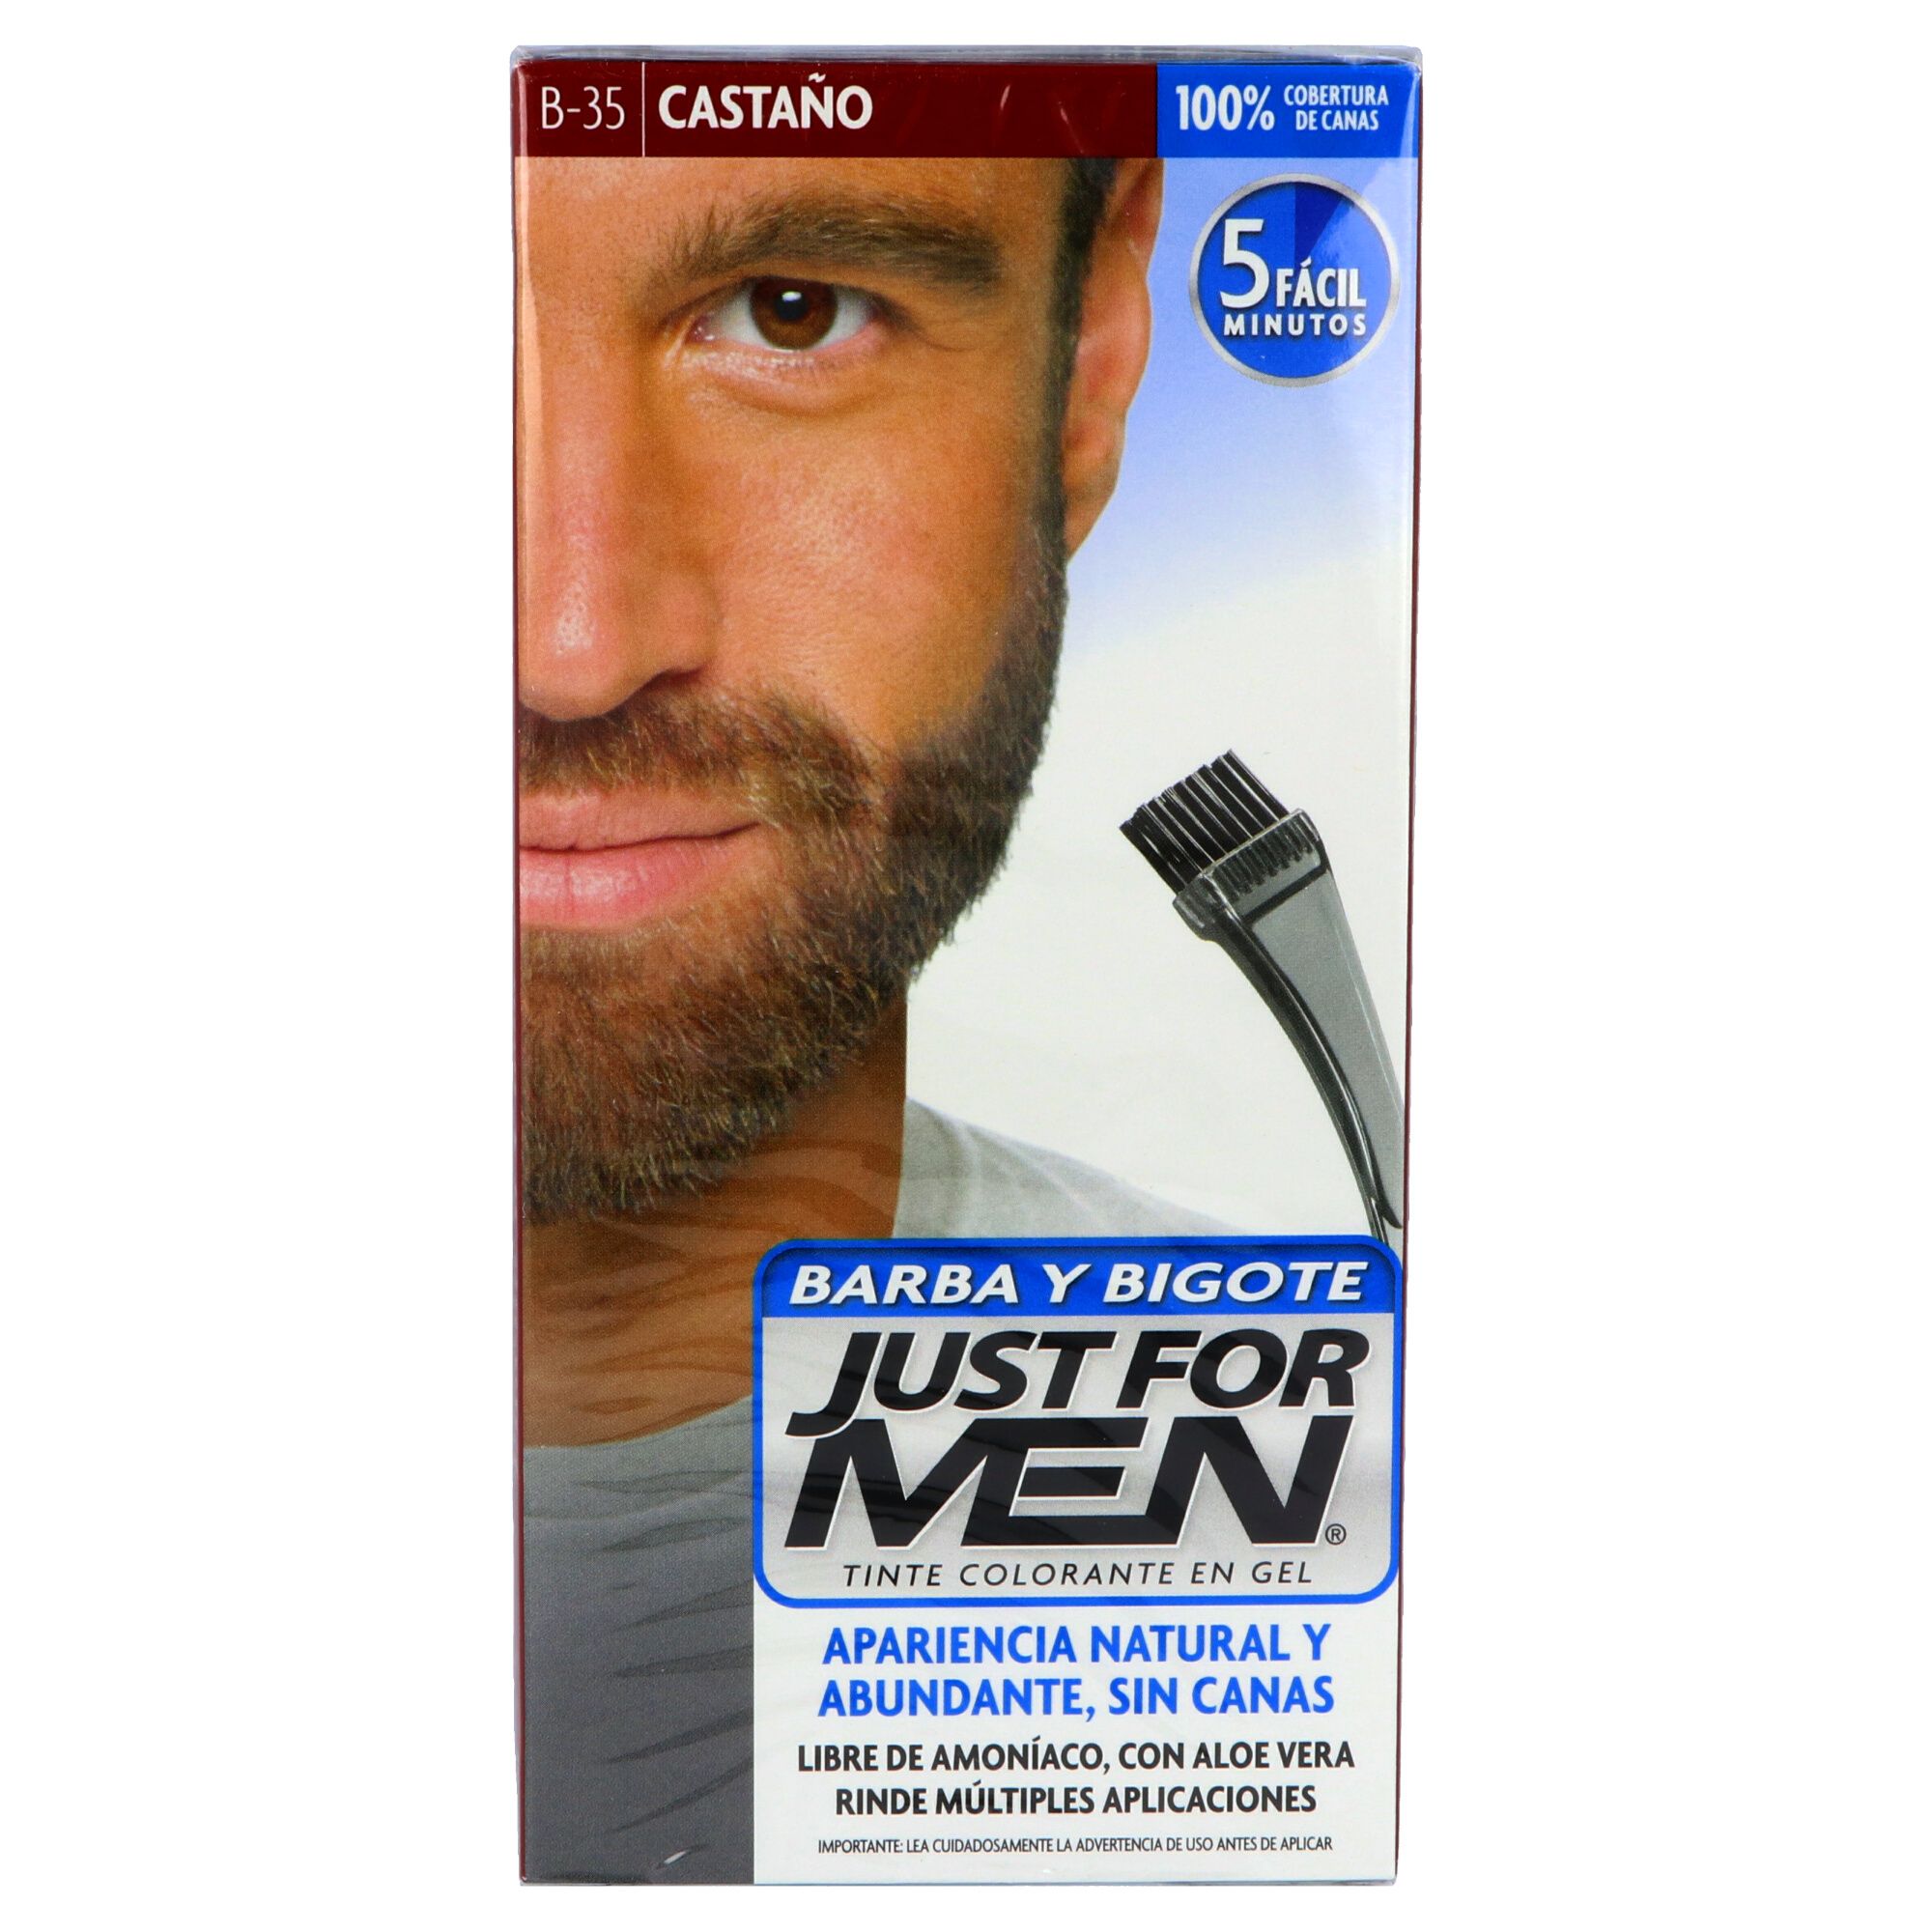 Precio Just For Men barba y bigote castaño b35 | Farmalisto MX